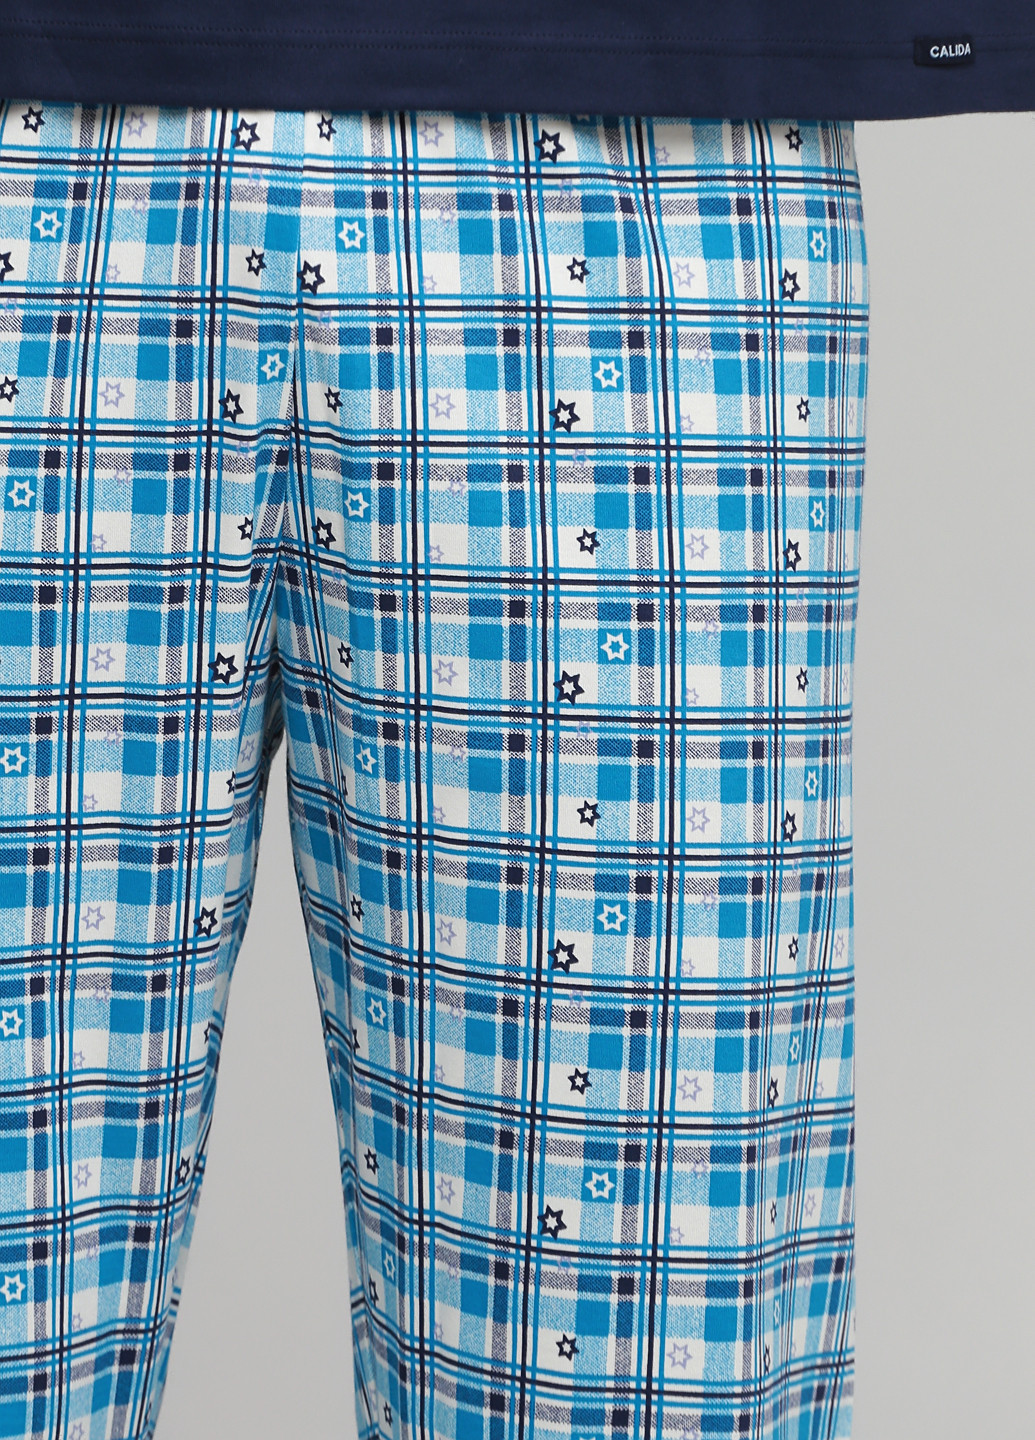 Пижама (лонгслив, брюки) Calida лонгслив + брюки клетка комбинированная домашняя хлопок, трикотаж